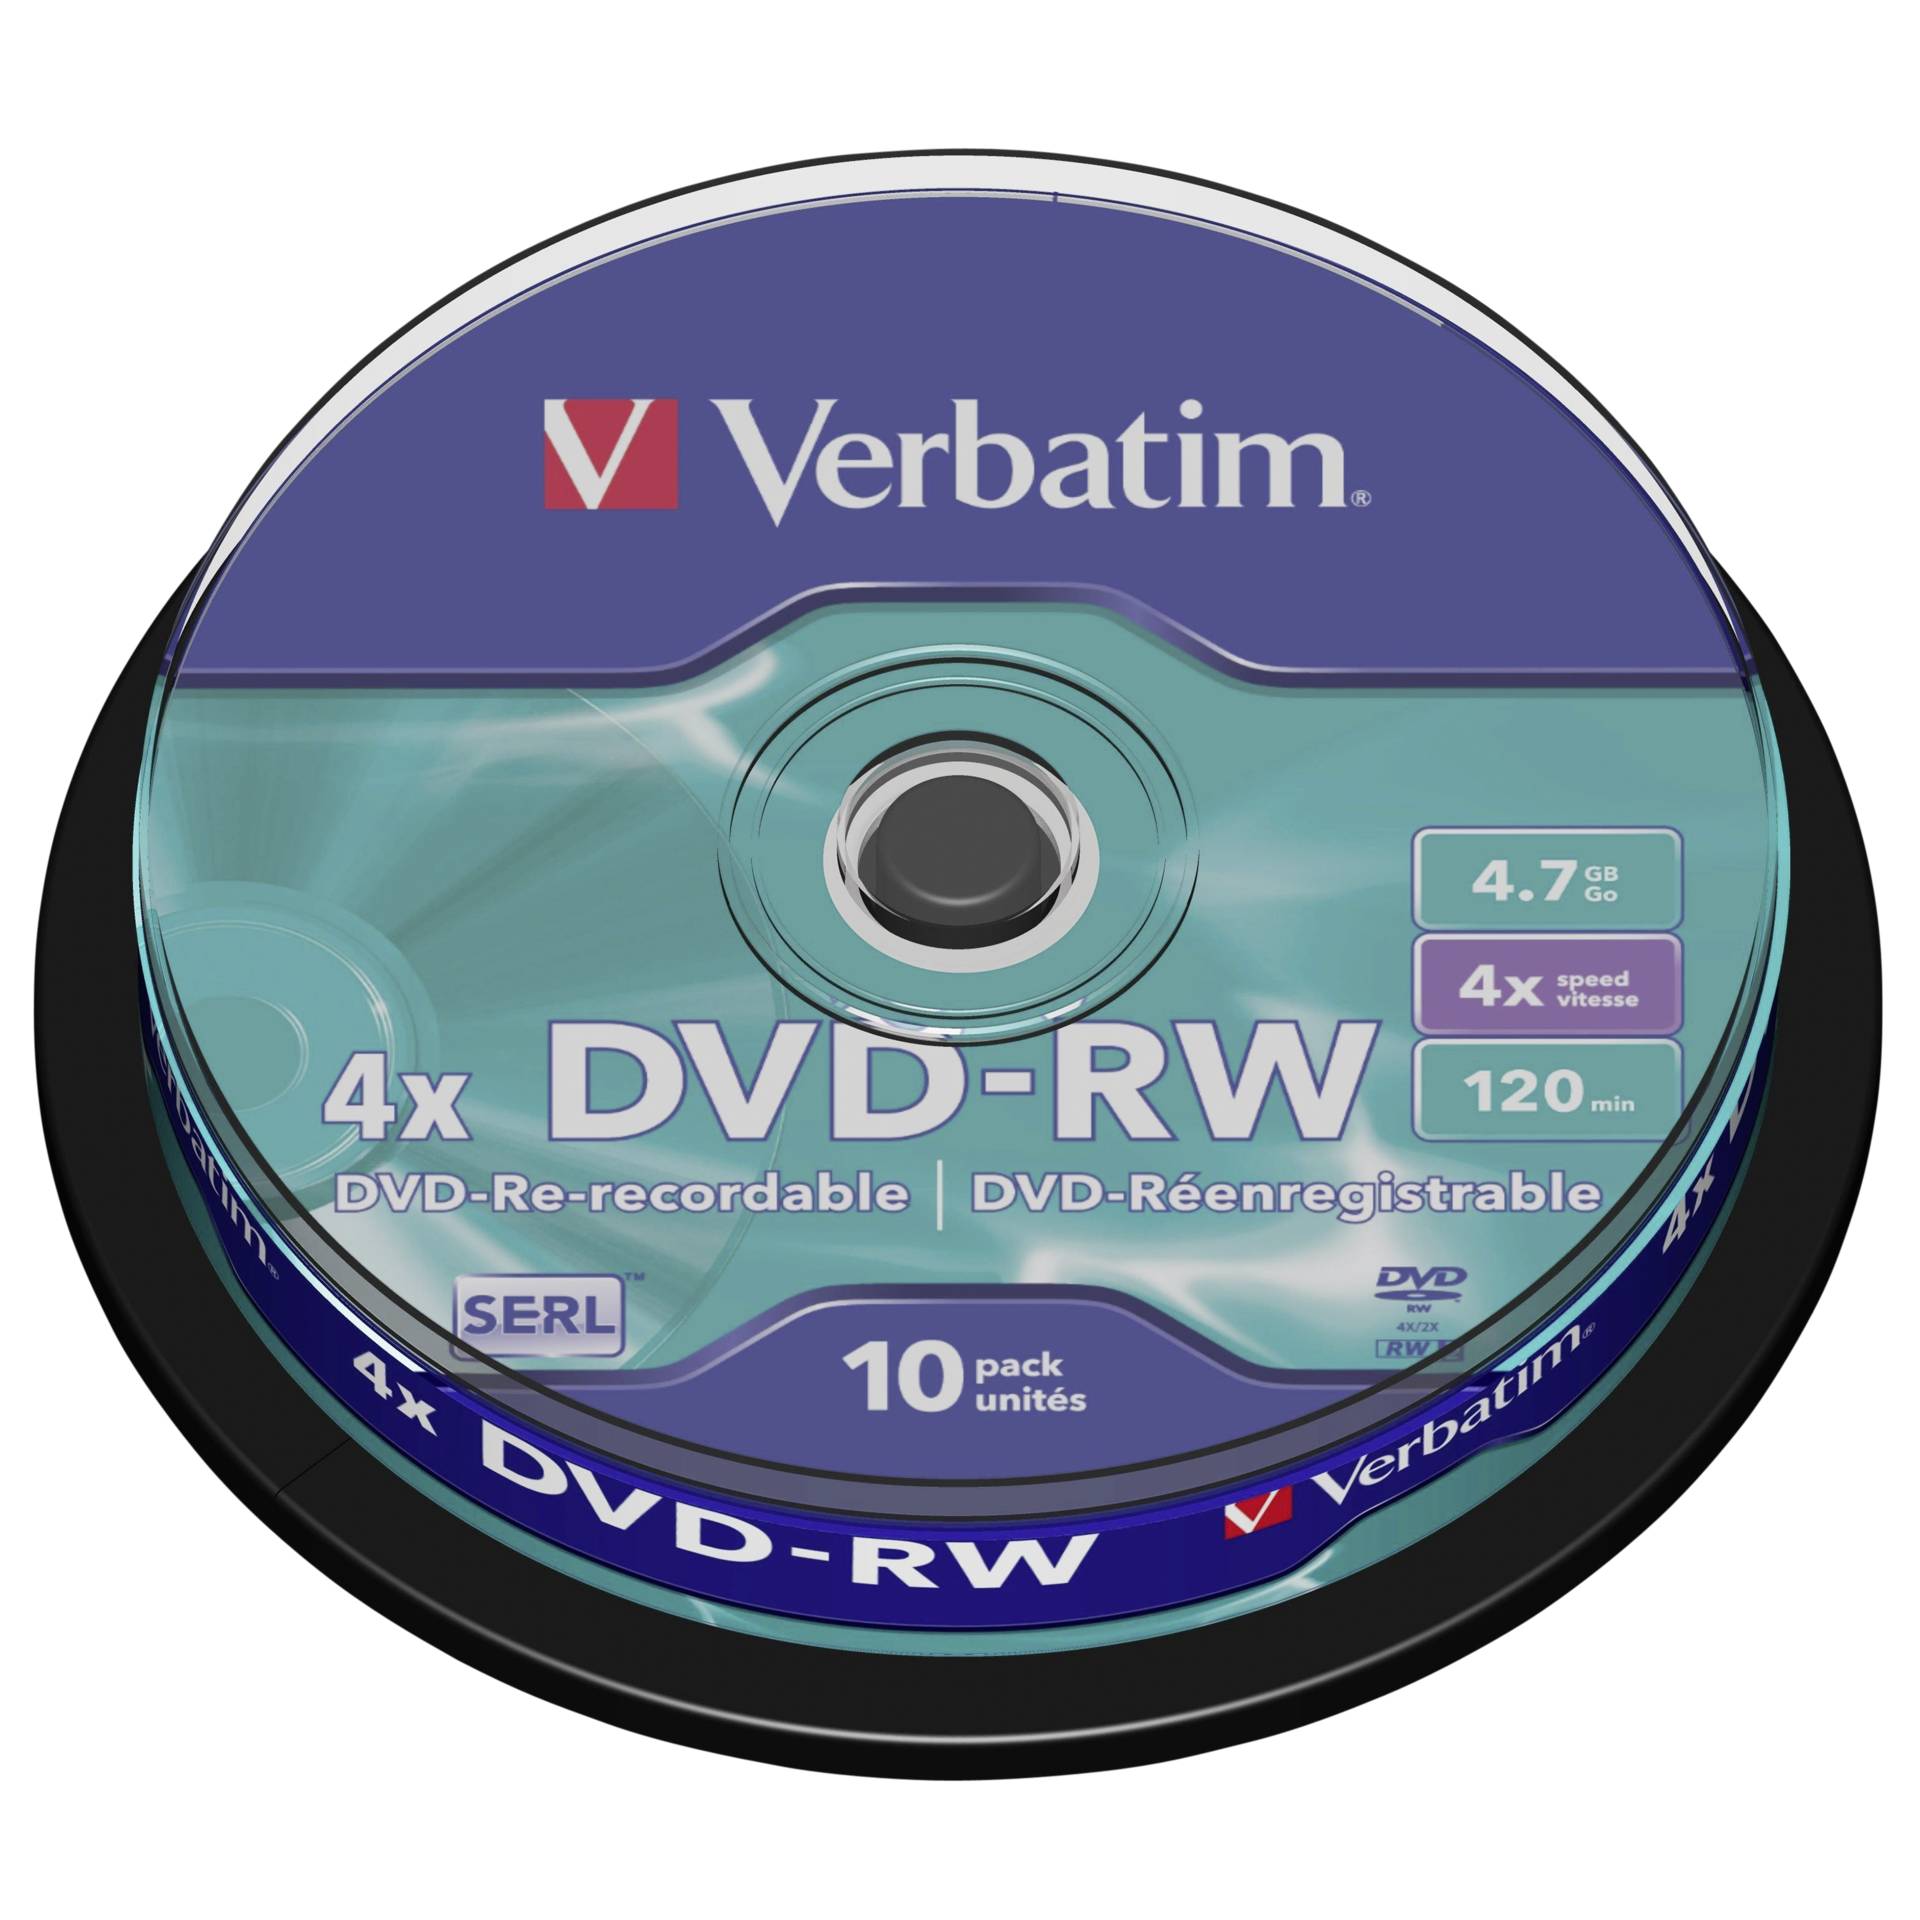 1x10 Verbatim DVD-RW 4,7GB 4x Speed, opaco argento Cakebox